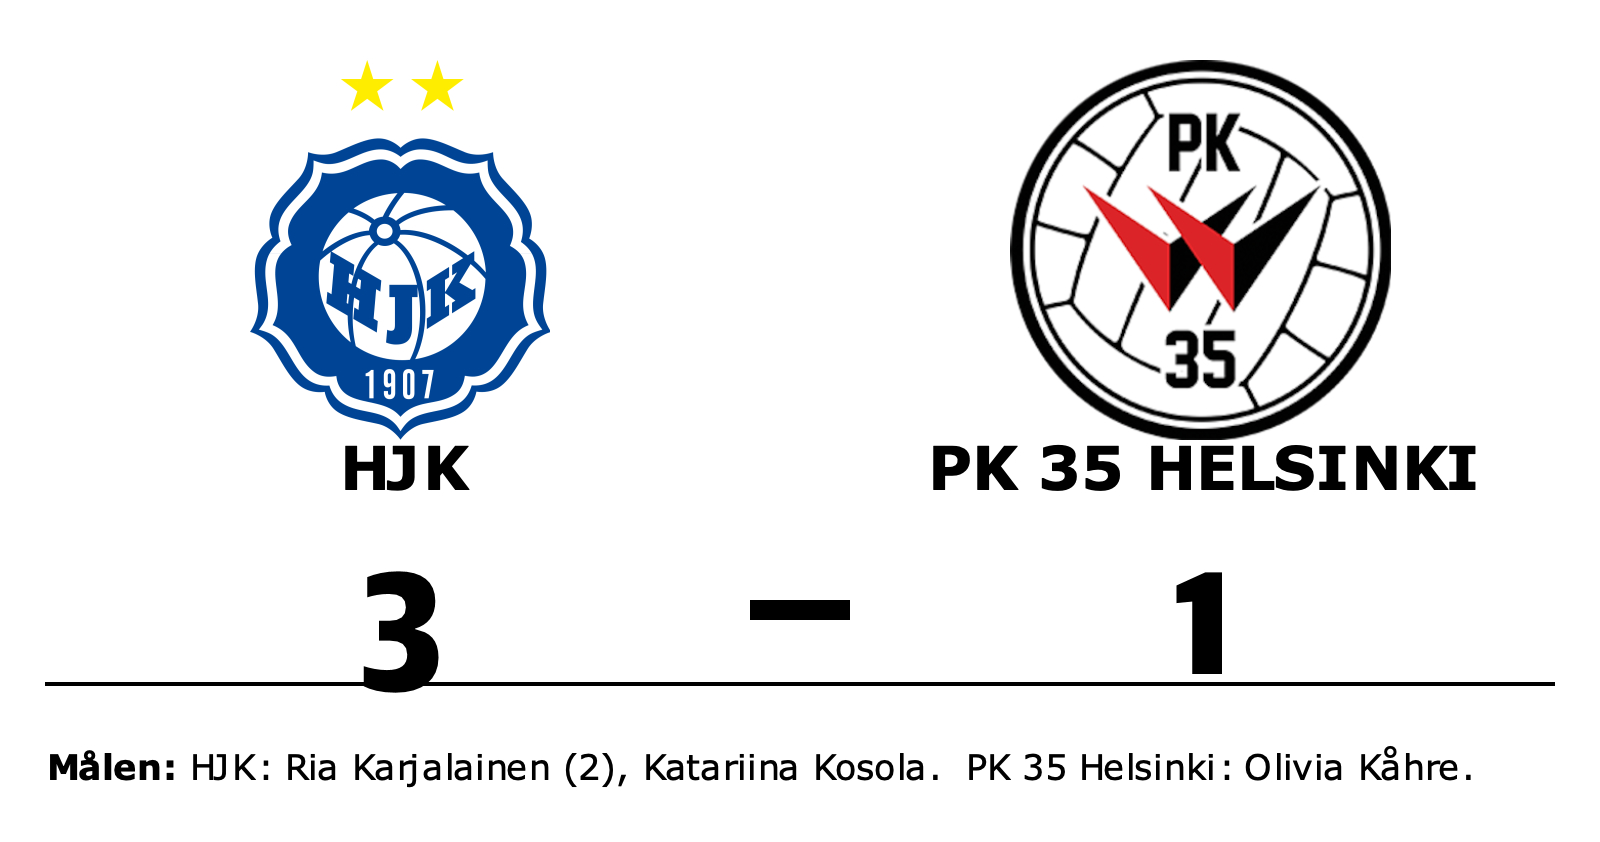 HJK vann mot PK 35 Helsinki